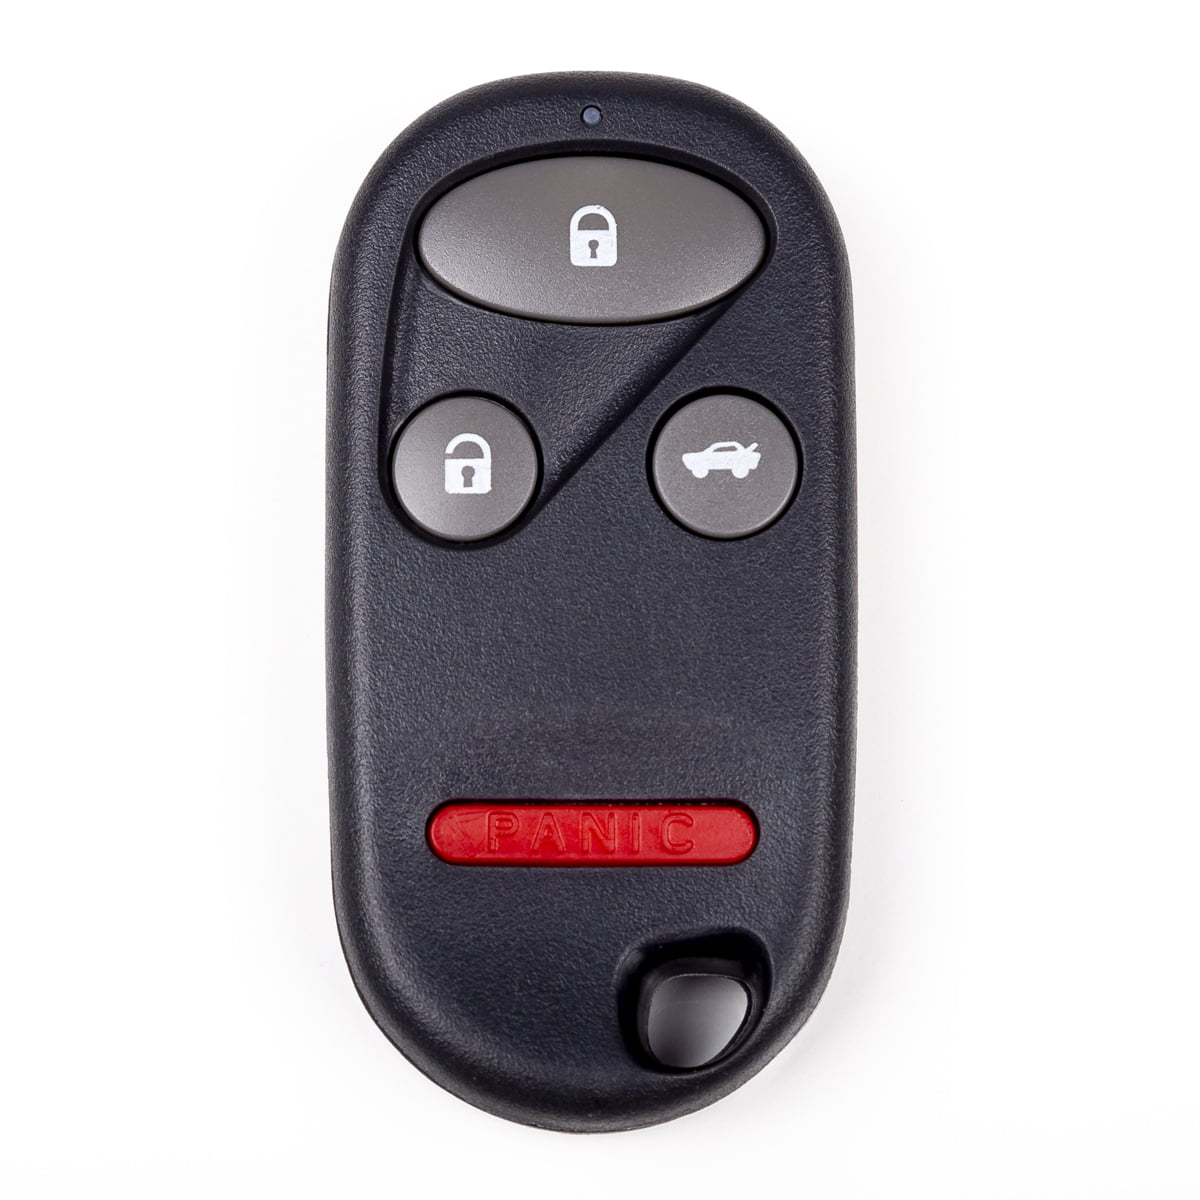 For Acura TL 1999 2000 2001 2002 2003 Keyless Entry Remote Key Car Fob ...